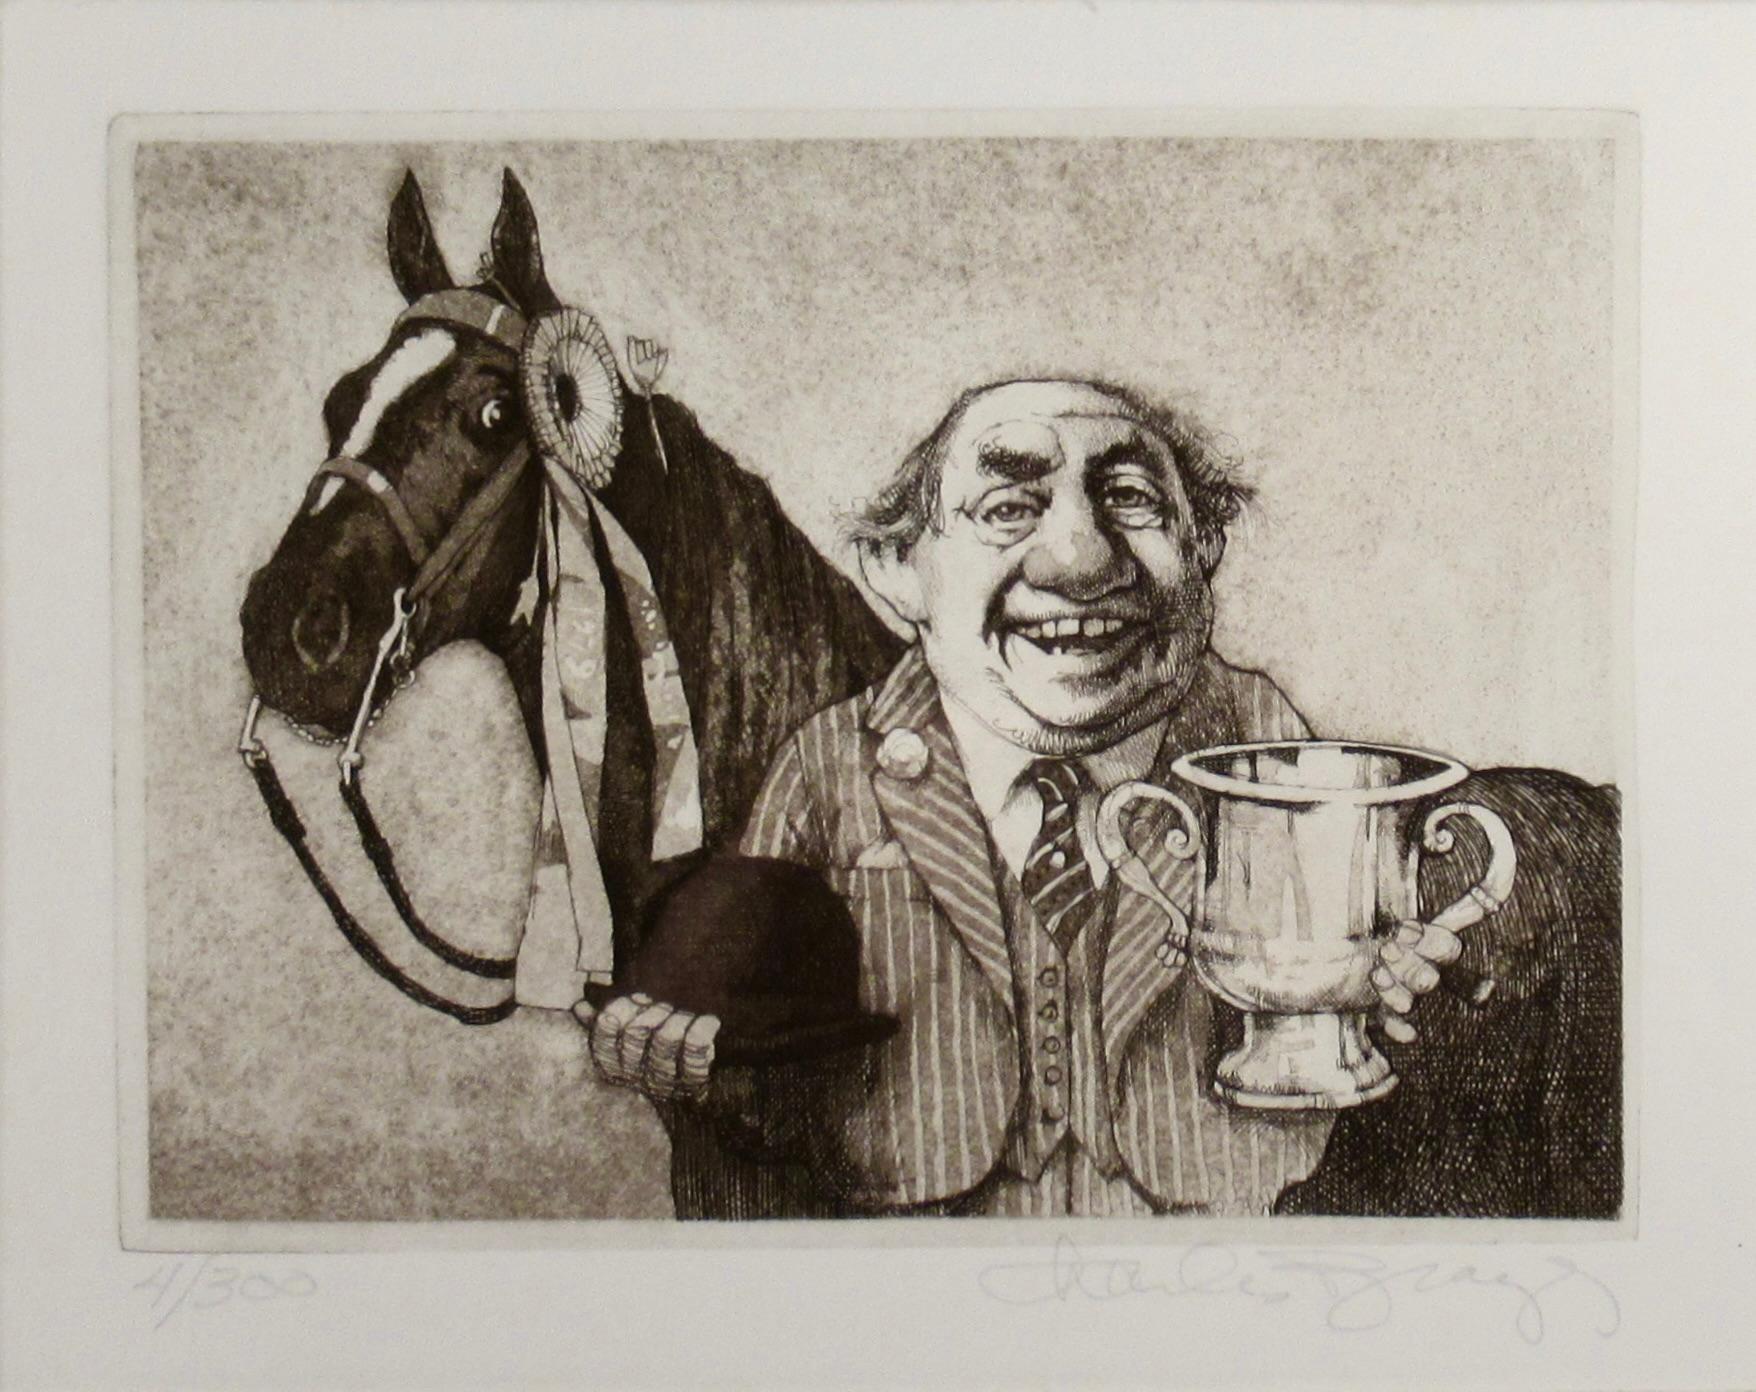 The Equestrian - Print by Charles Bragg